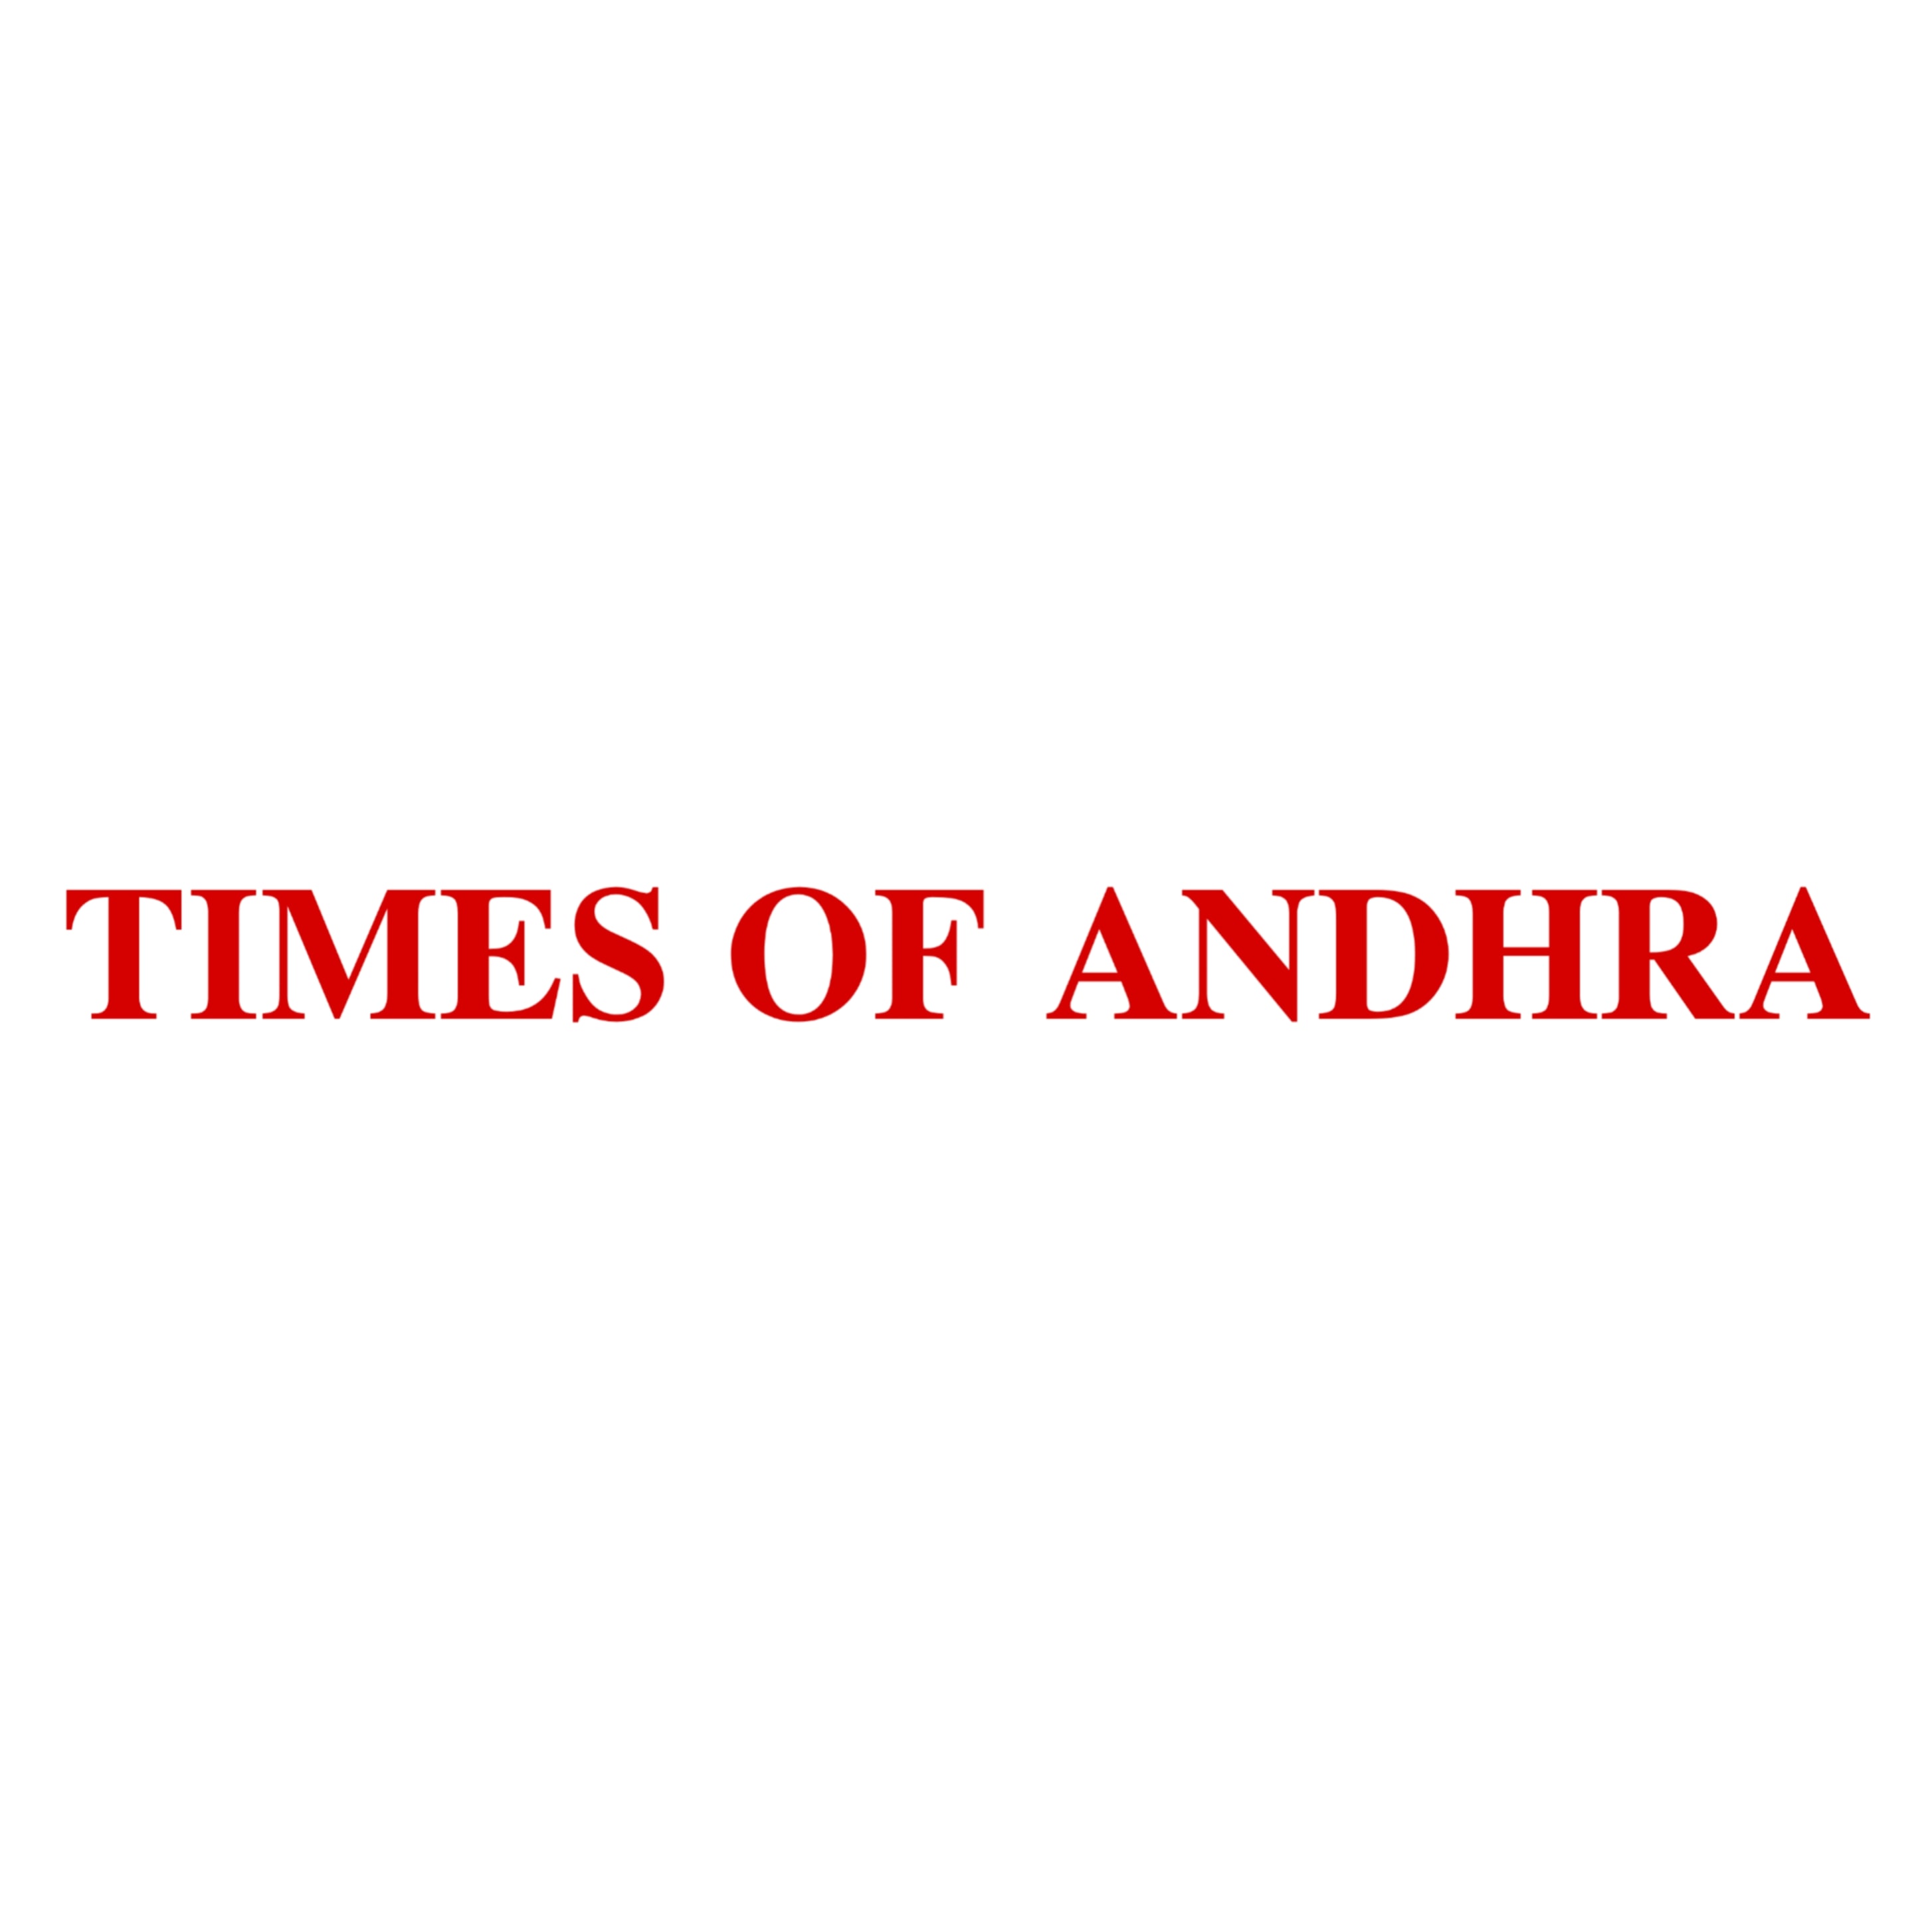 Times of Andhra.jpg